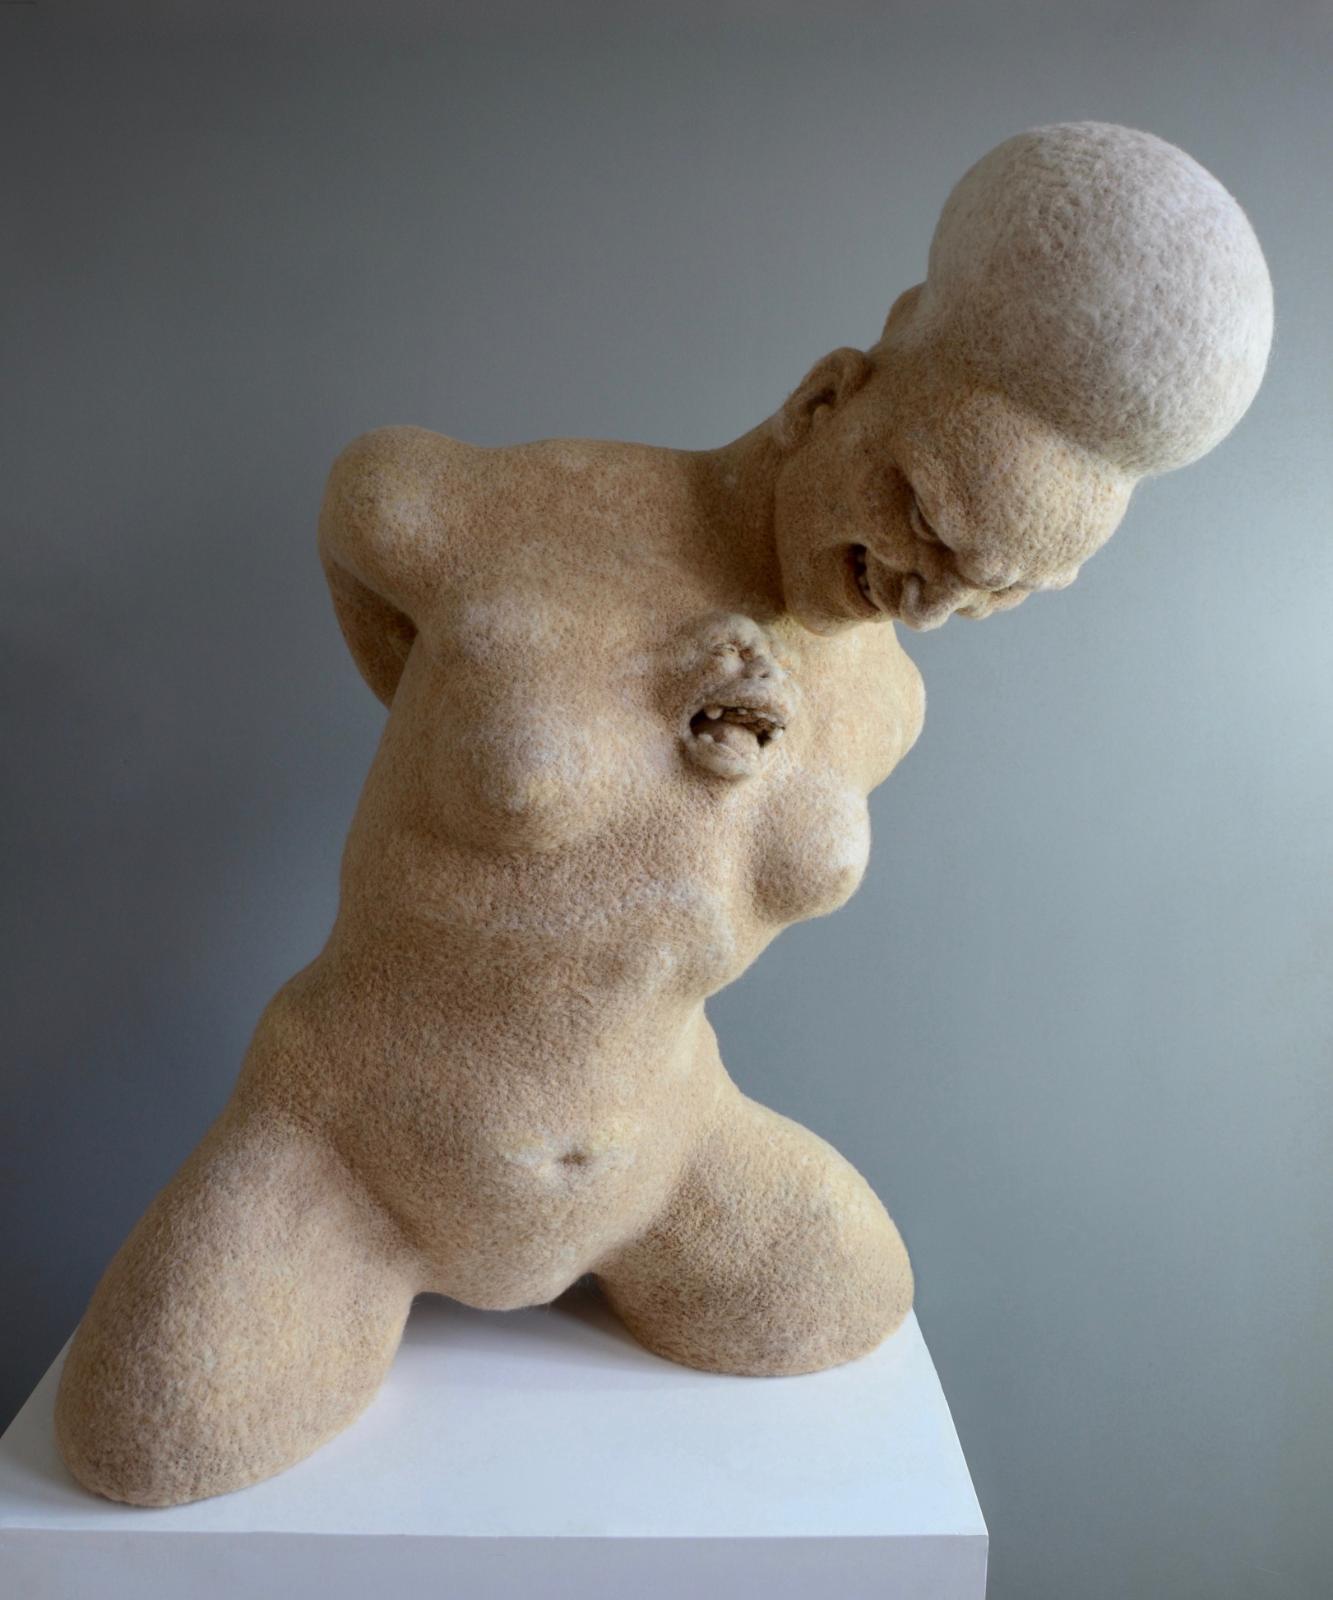 Stefanie Ehrenfried, Starke, 2010, Wolle nadelgefilzt, 104 x 90 x 76 cm